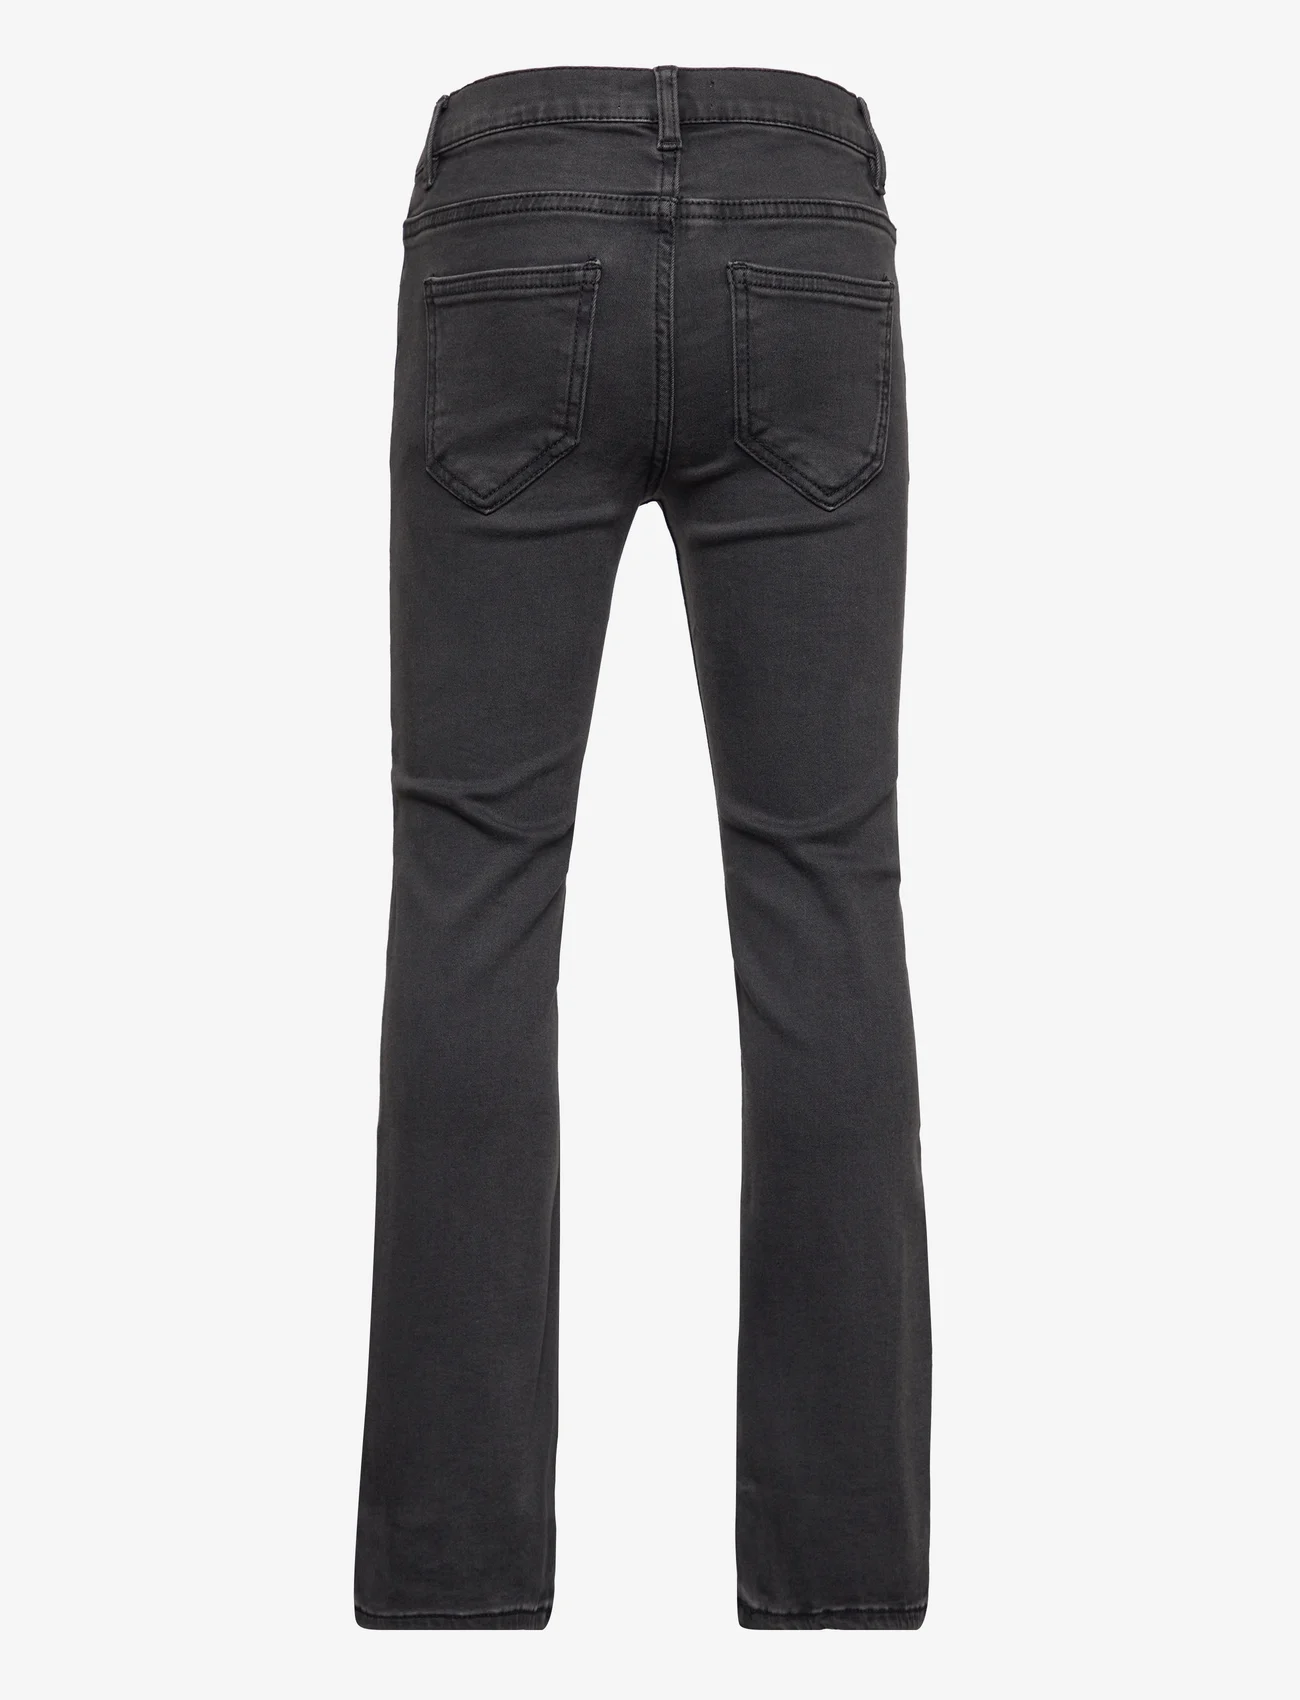 Lindex - Trousers denim Freja black - regular jeans - black - 1